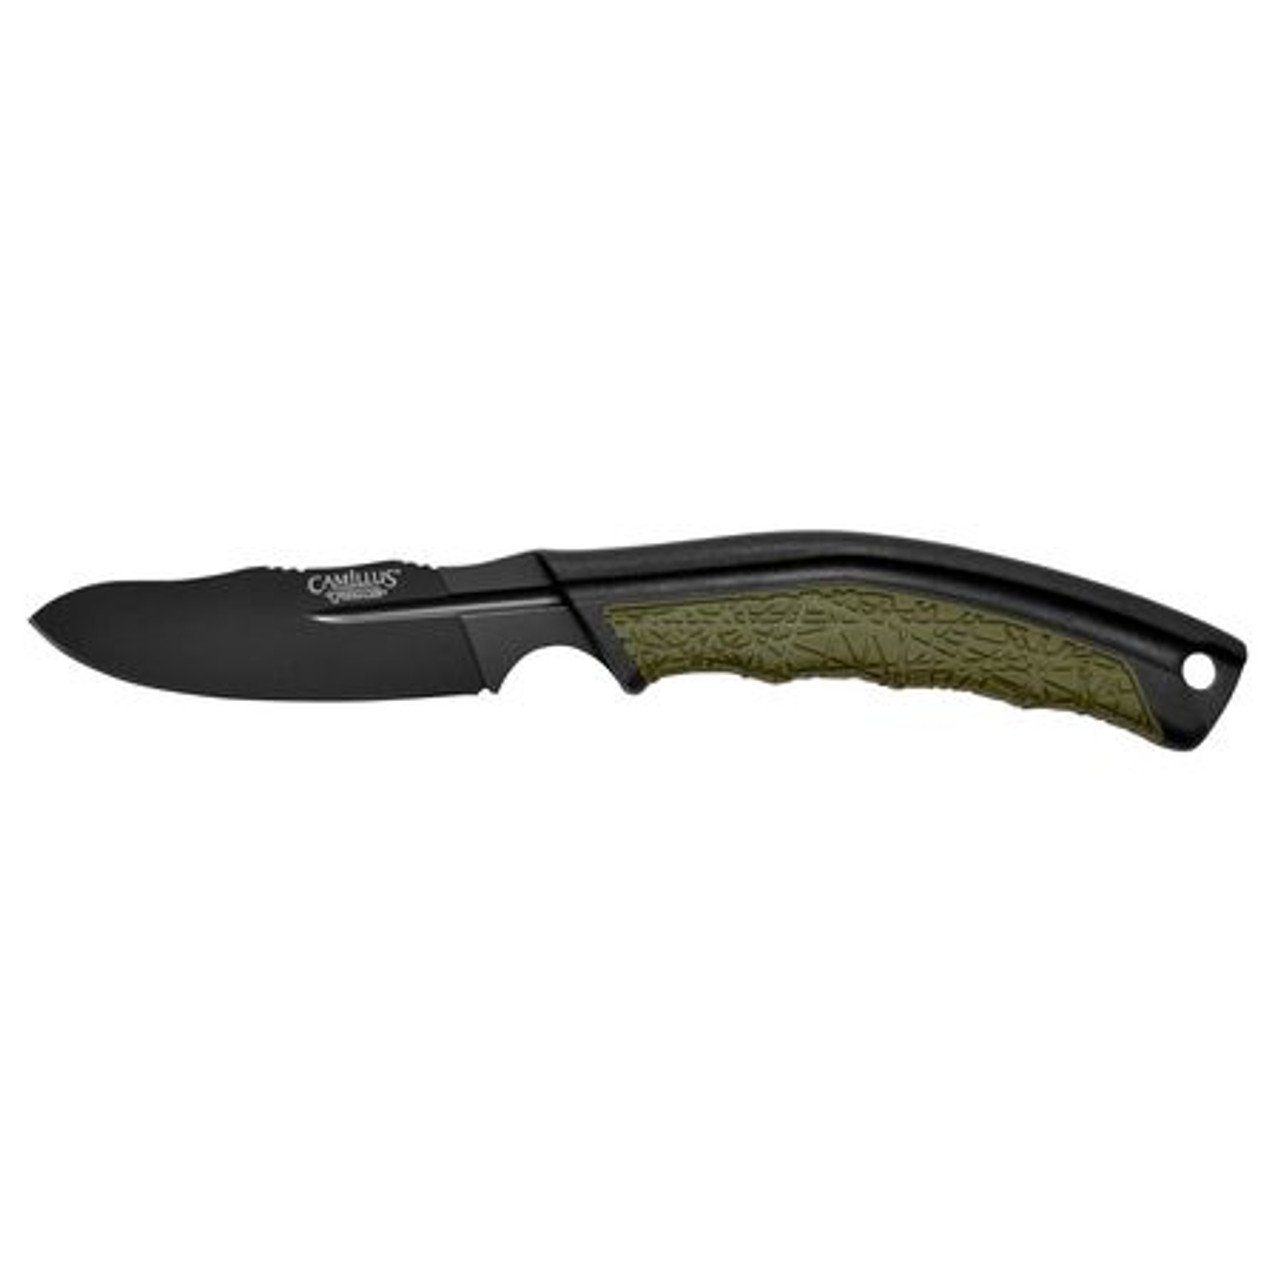 Camillus KPK-3 3.5" Blade Fixed Knife